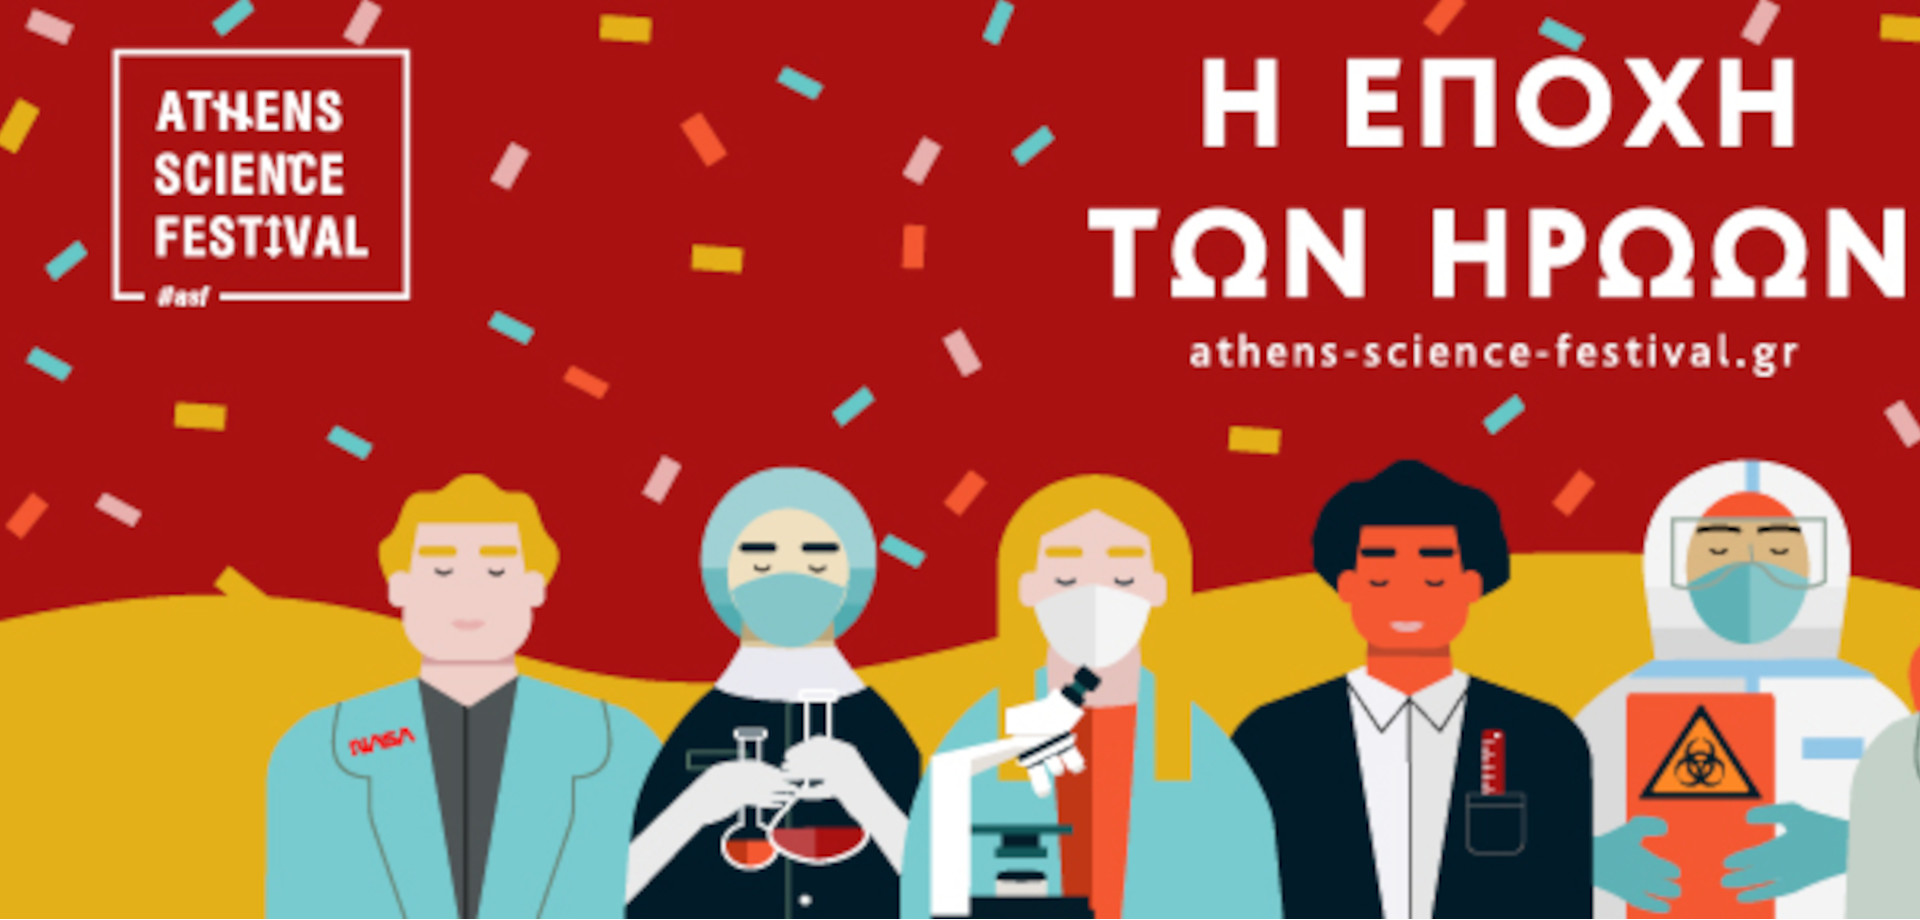 Athens Science Virtual Festival 2021